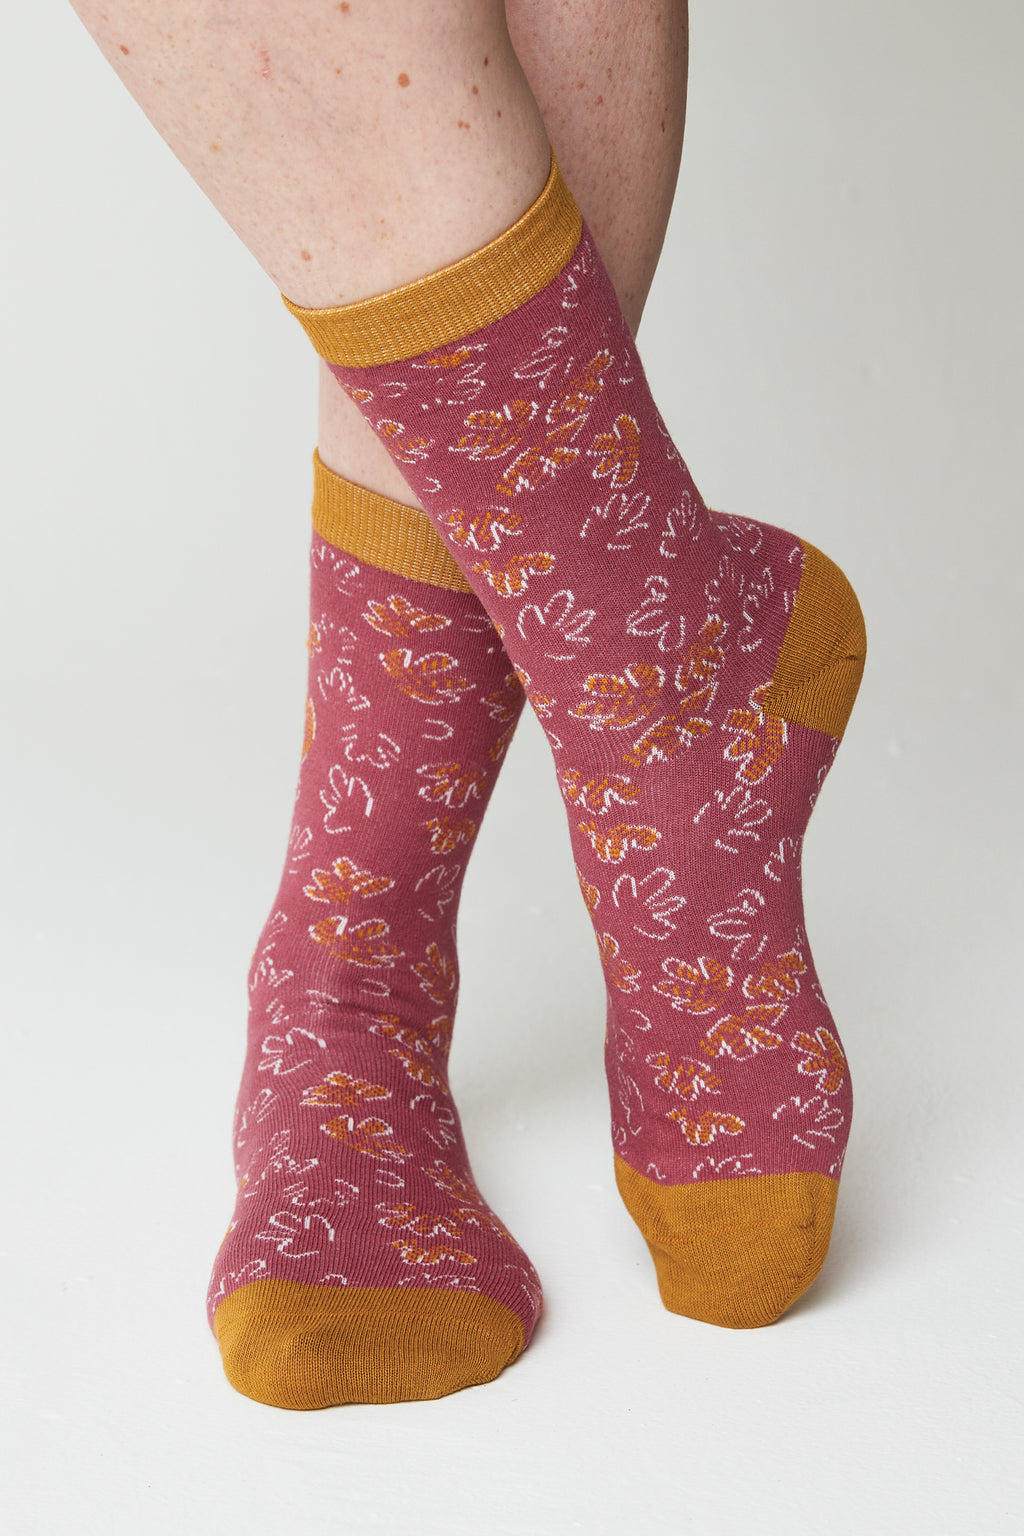 chaussettes-aralia-motif-floral-fond-framboise-raspberry-bambou-nomads